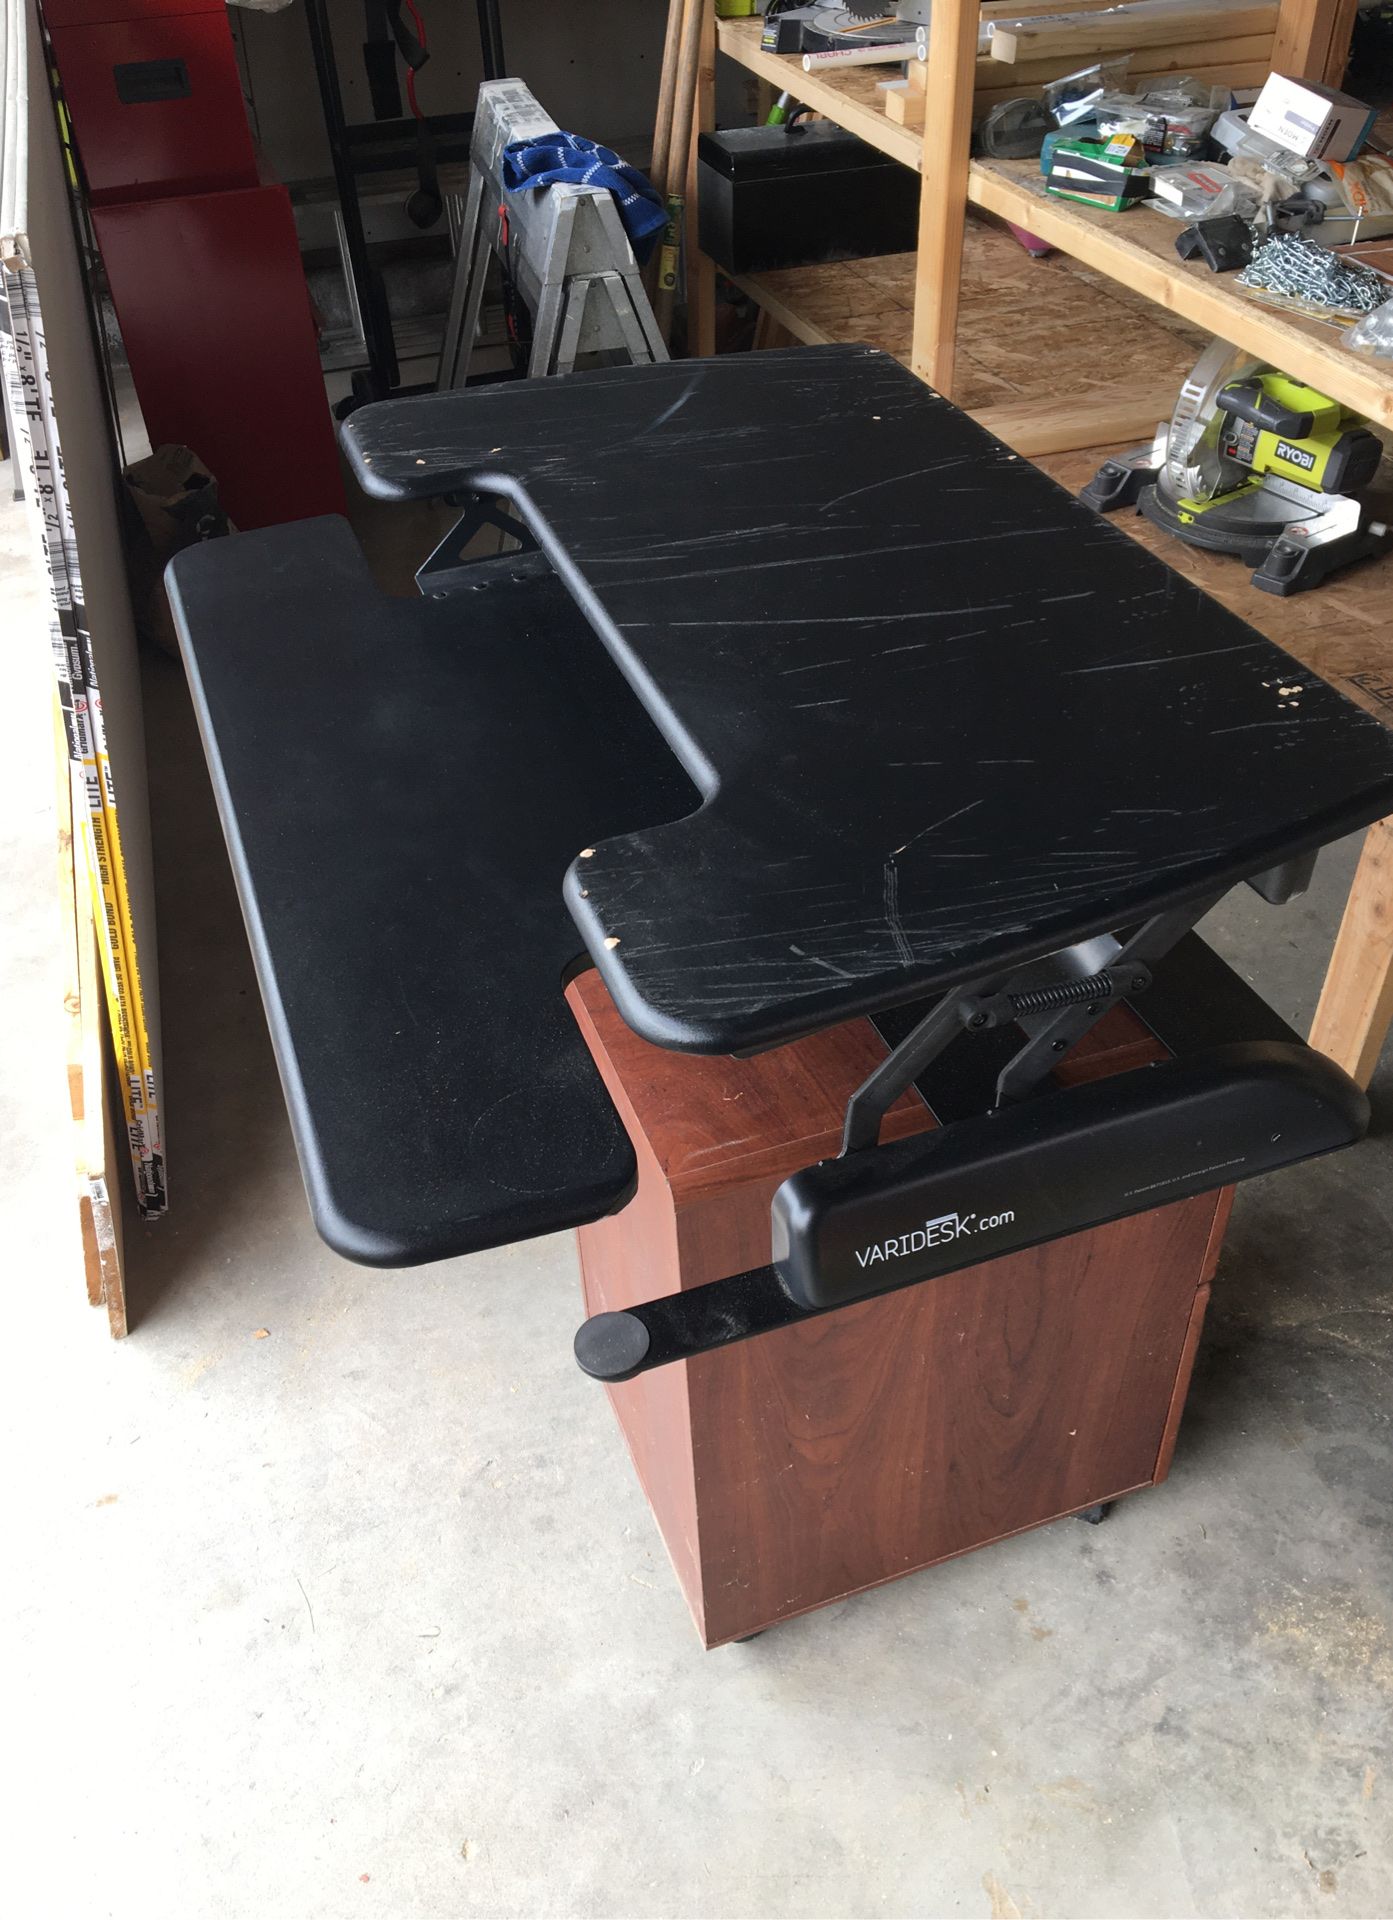 Varidesk 36 inch adjustable standing desk.